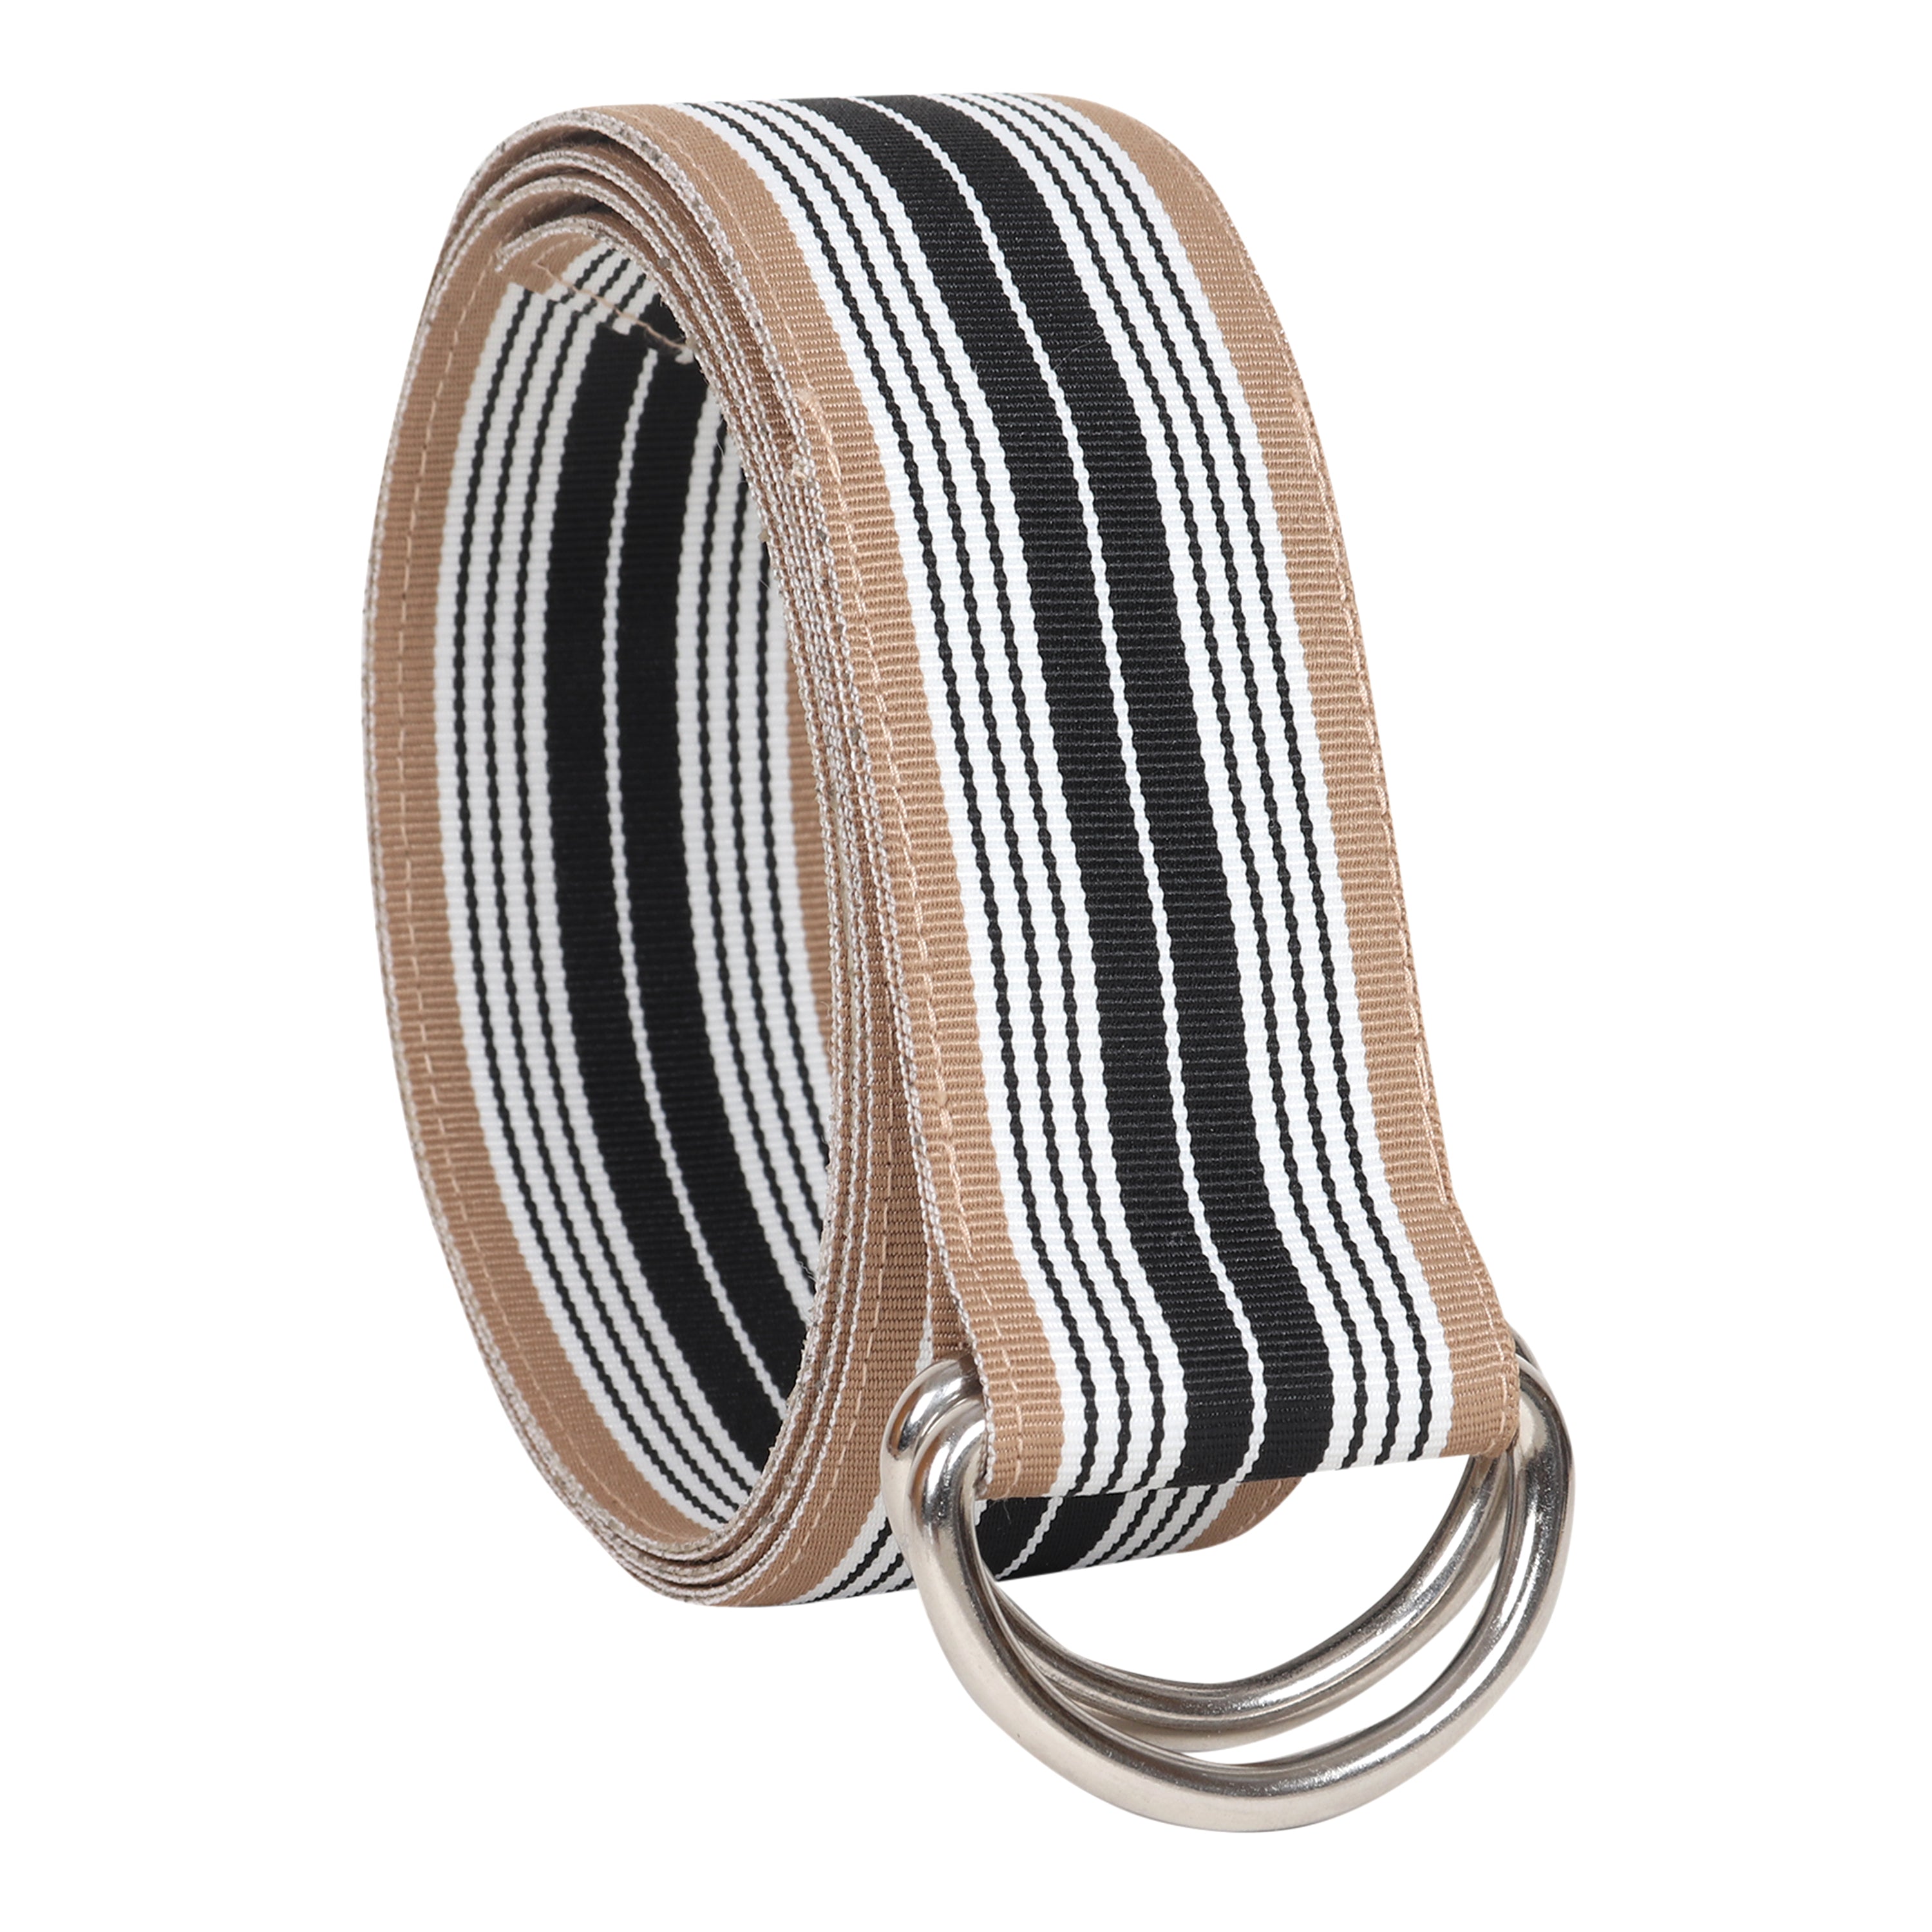 Arden Grosgrain Ribbon D-Ring Embroidered Belts